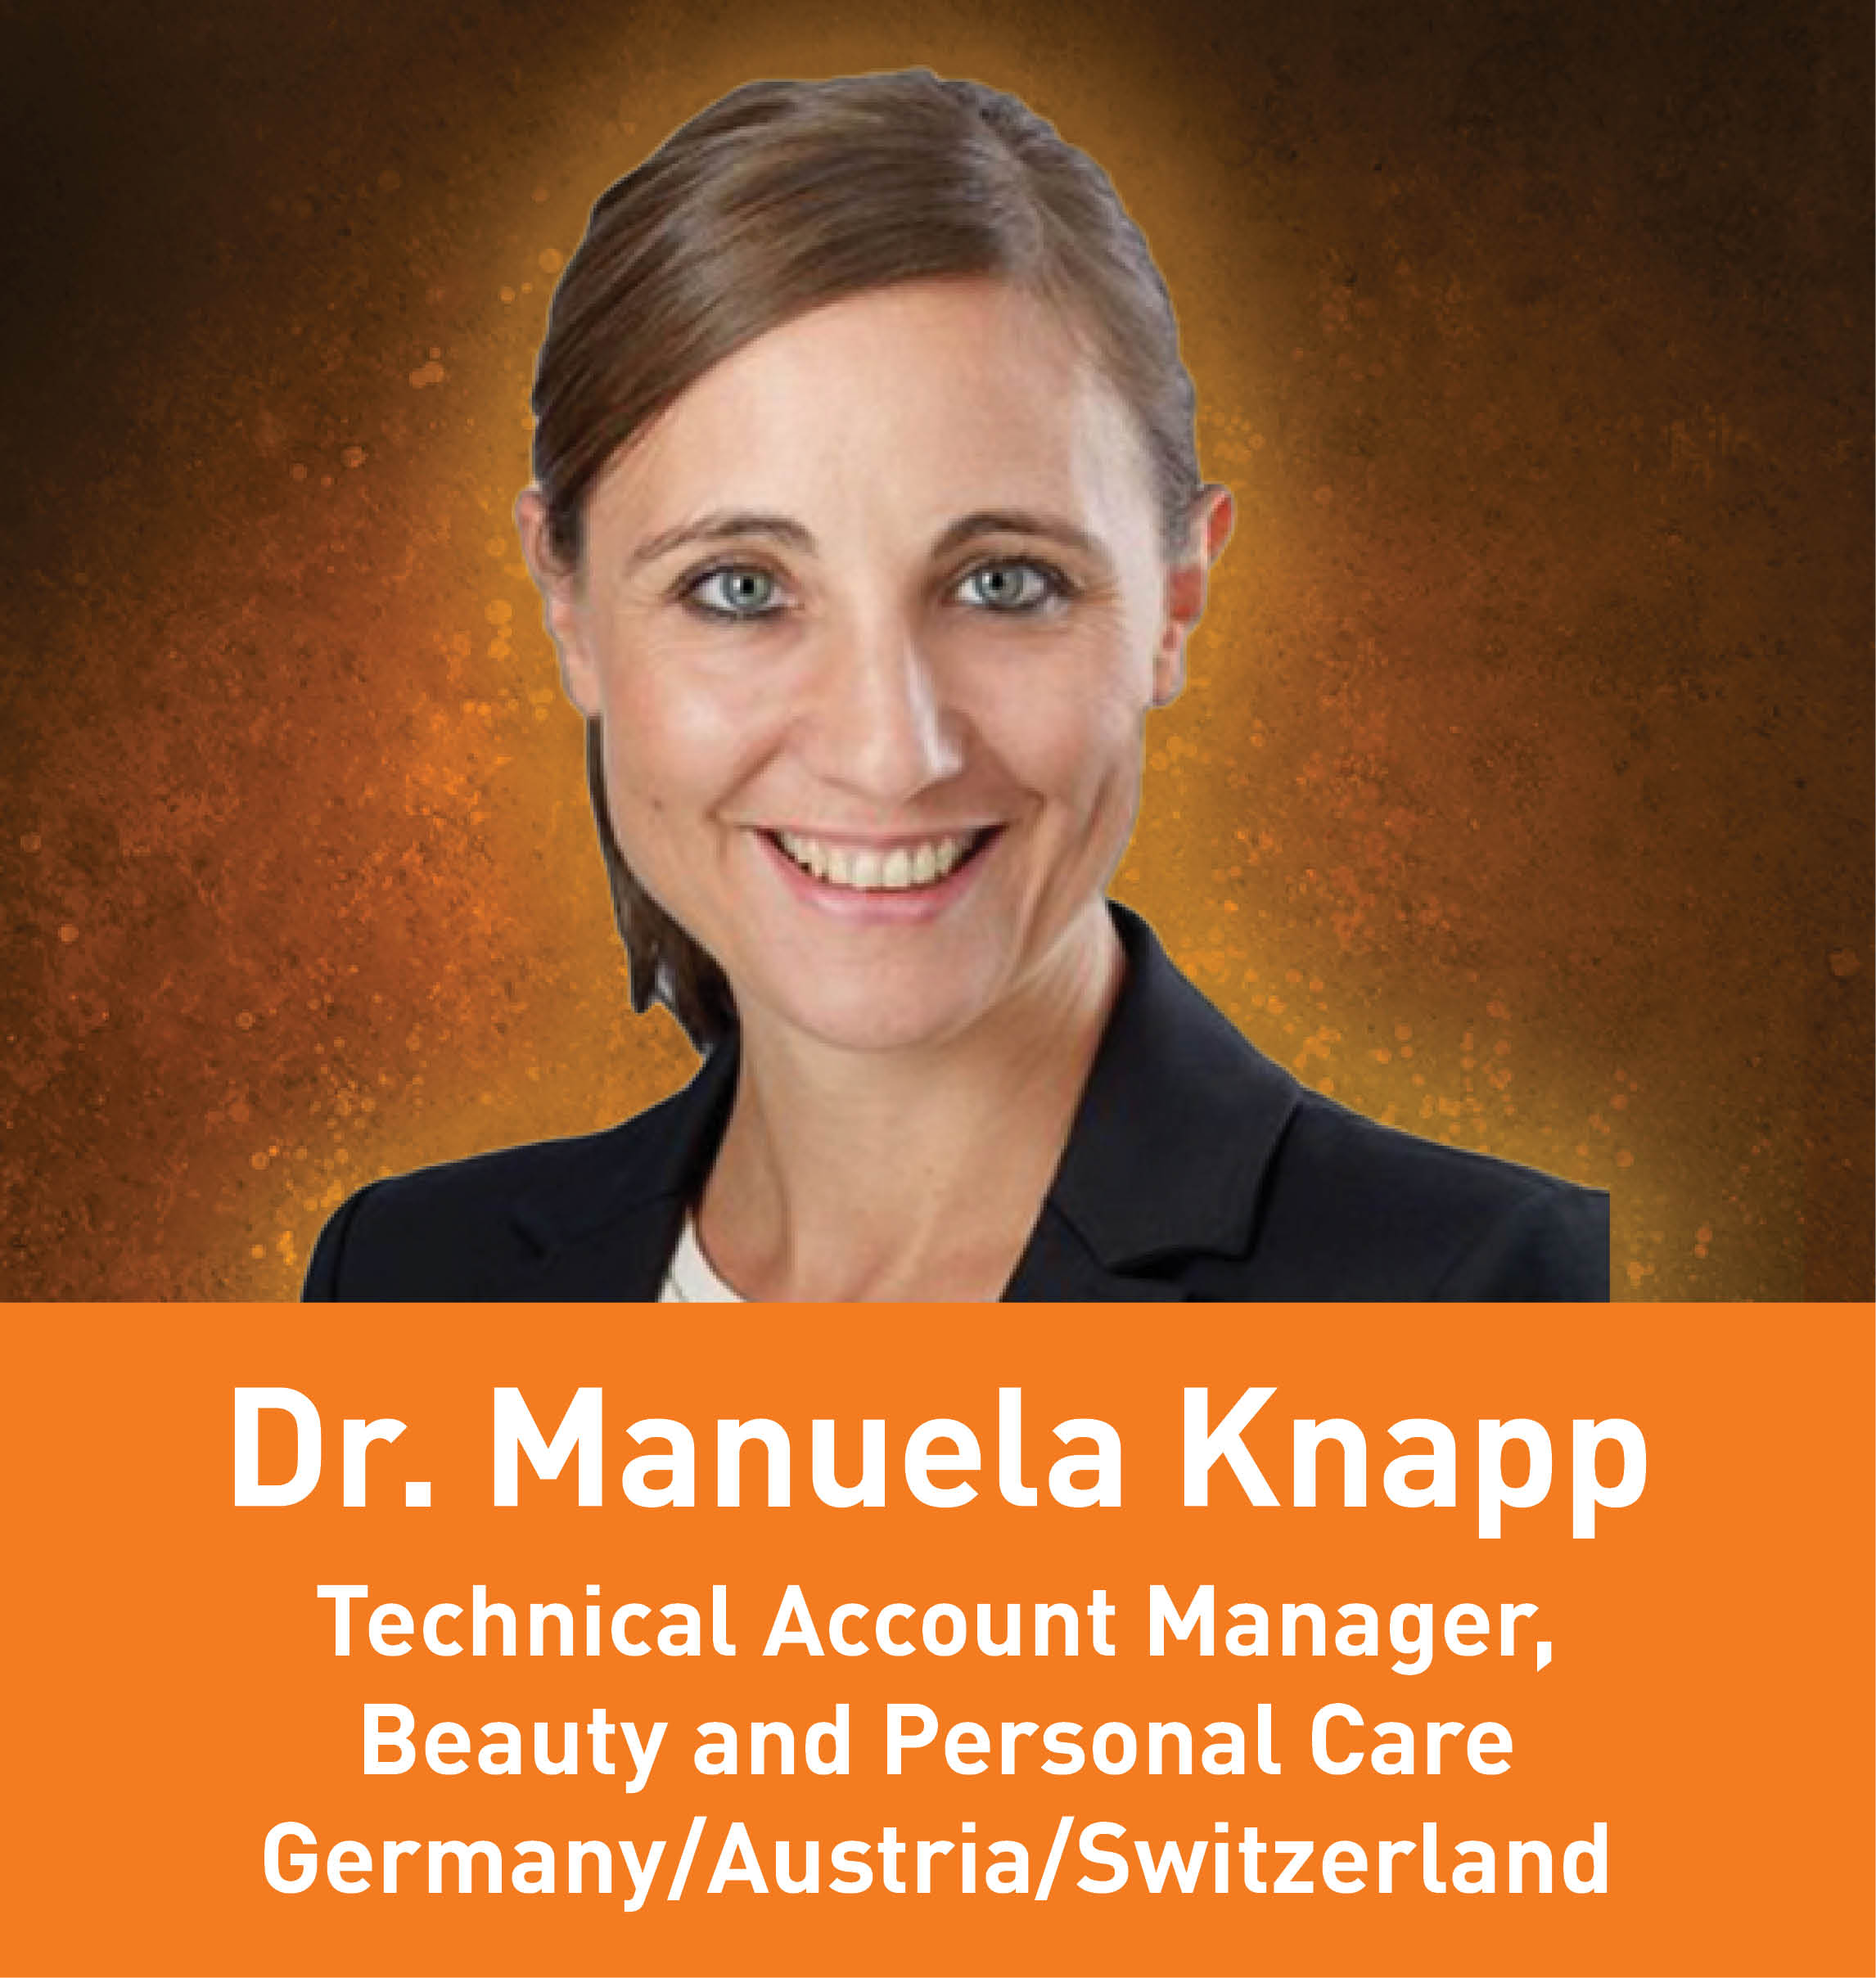 Dr. Manuela Knapp